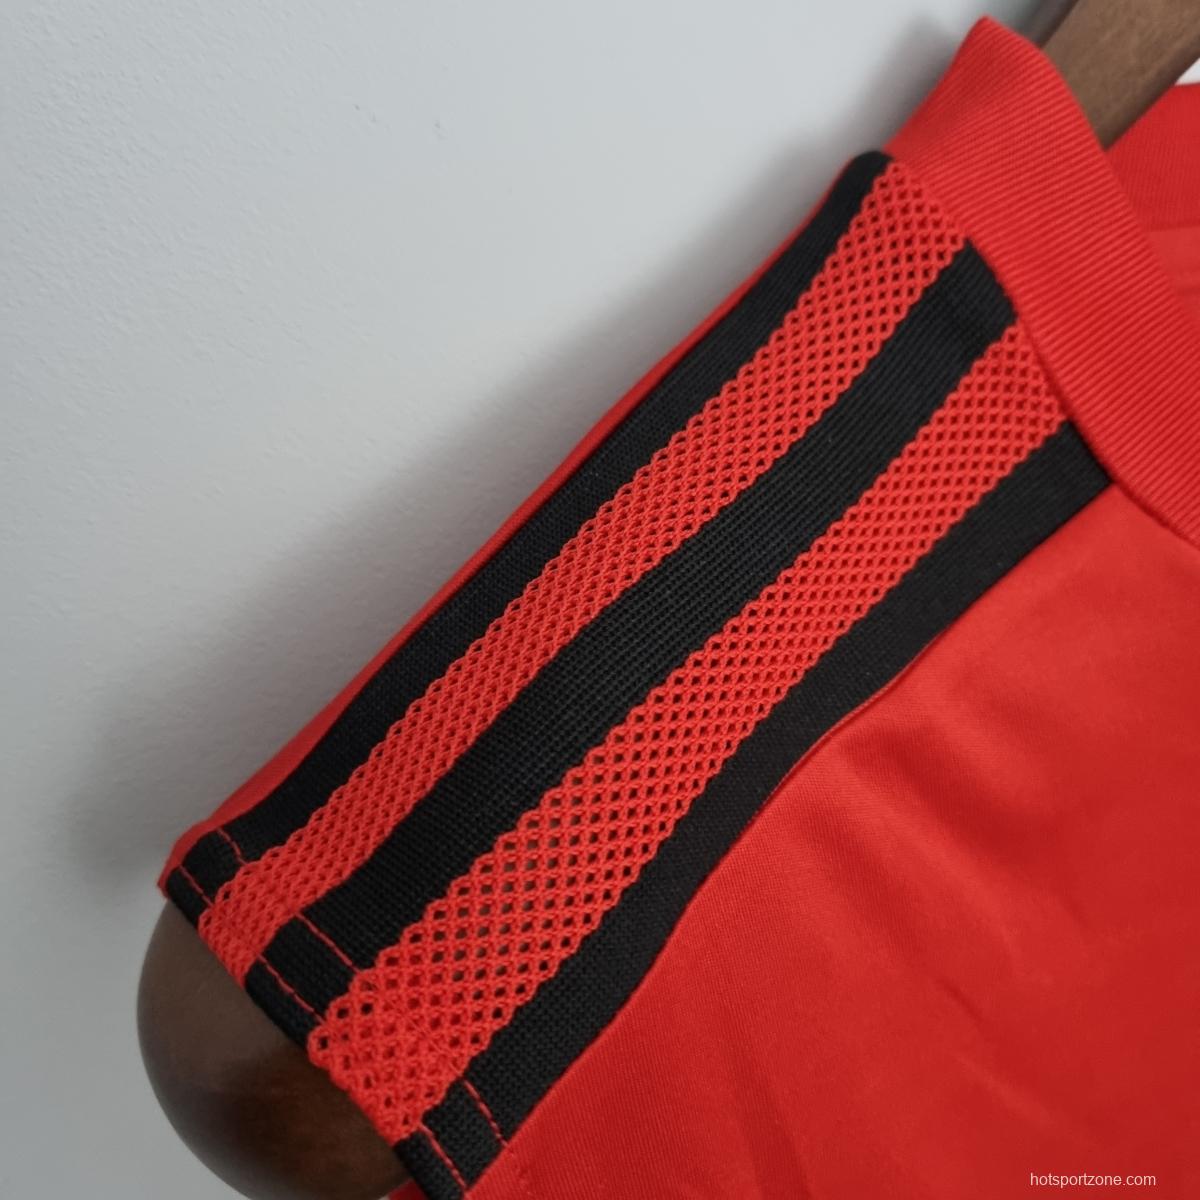 22/23 Flamengo Vest Training Suit Red Soccer Jersey